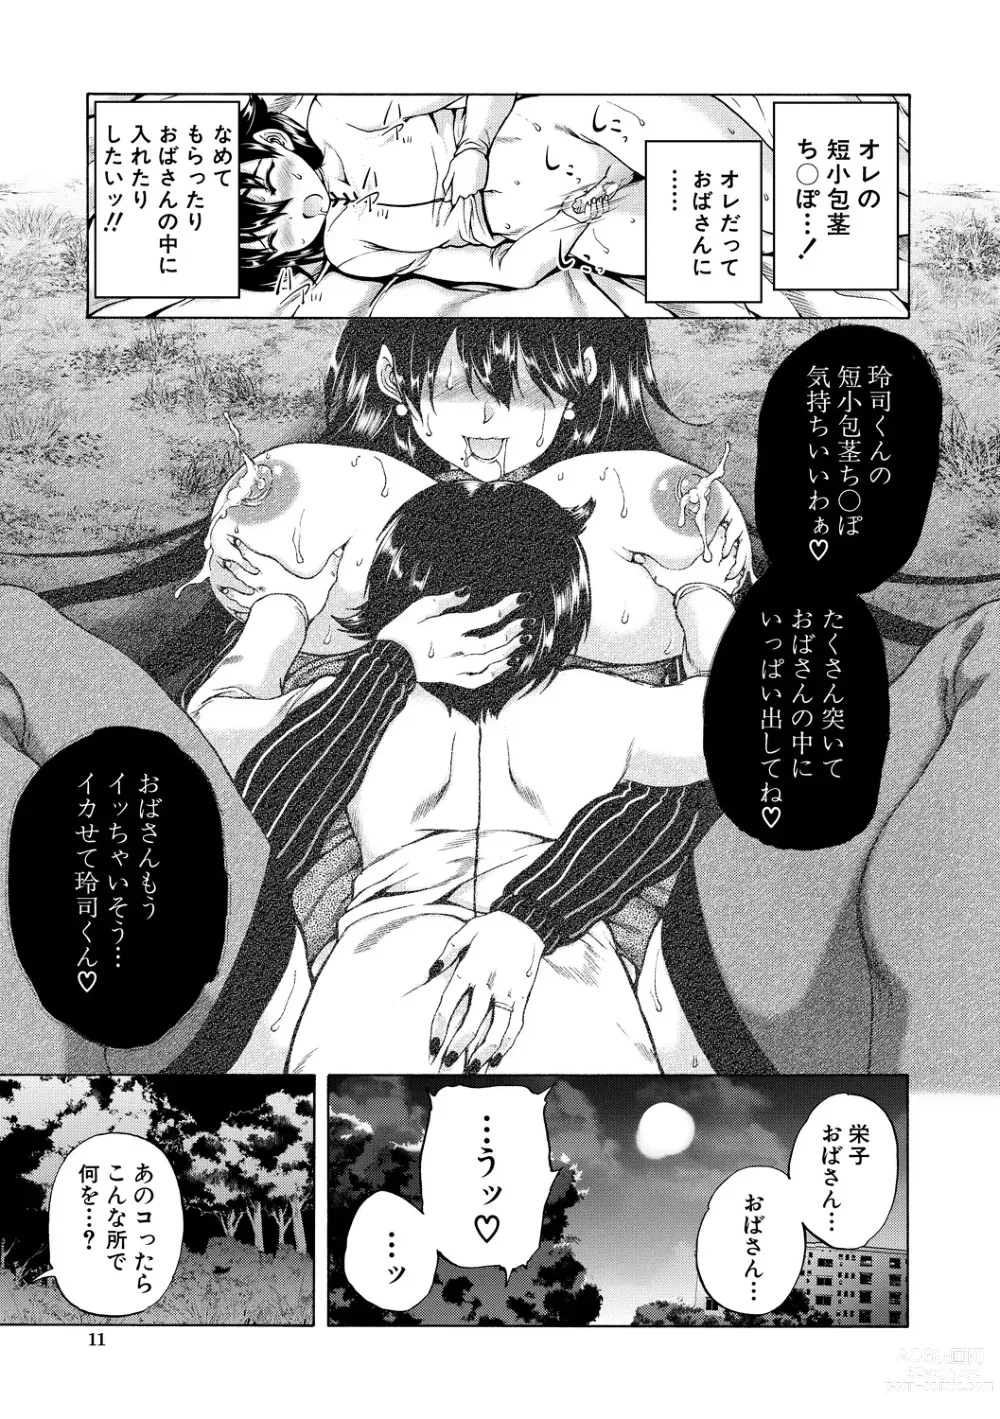 Page 11 of manga Maou Tensei Harem - Devil Reincarnation